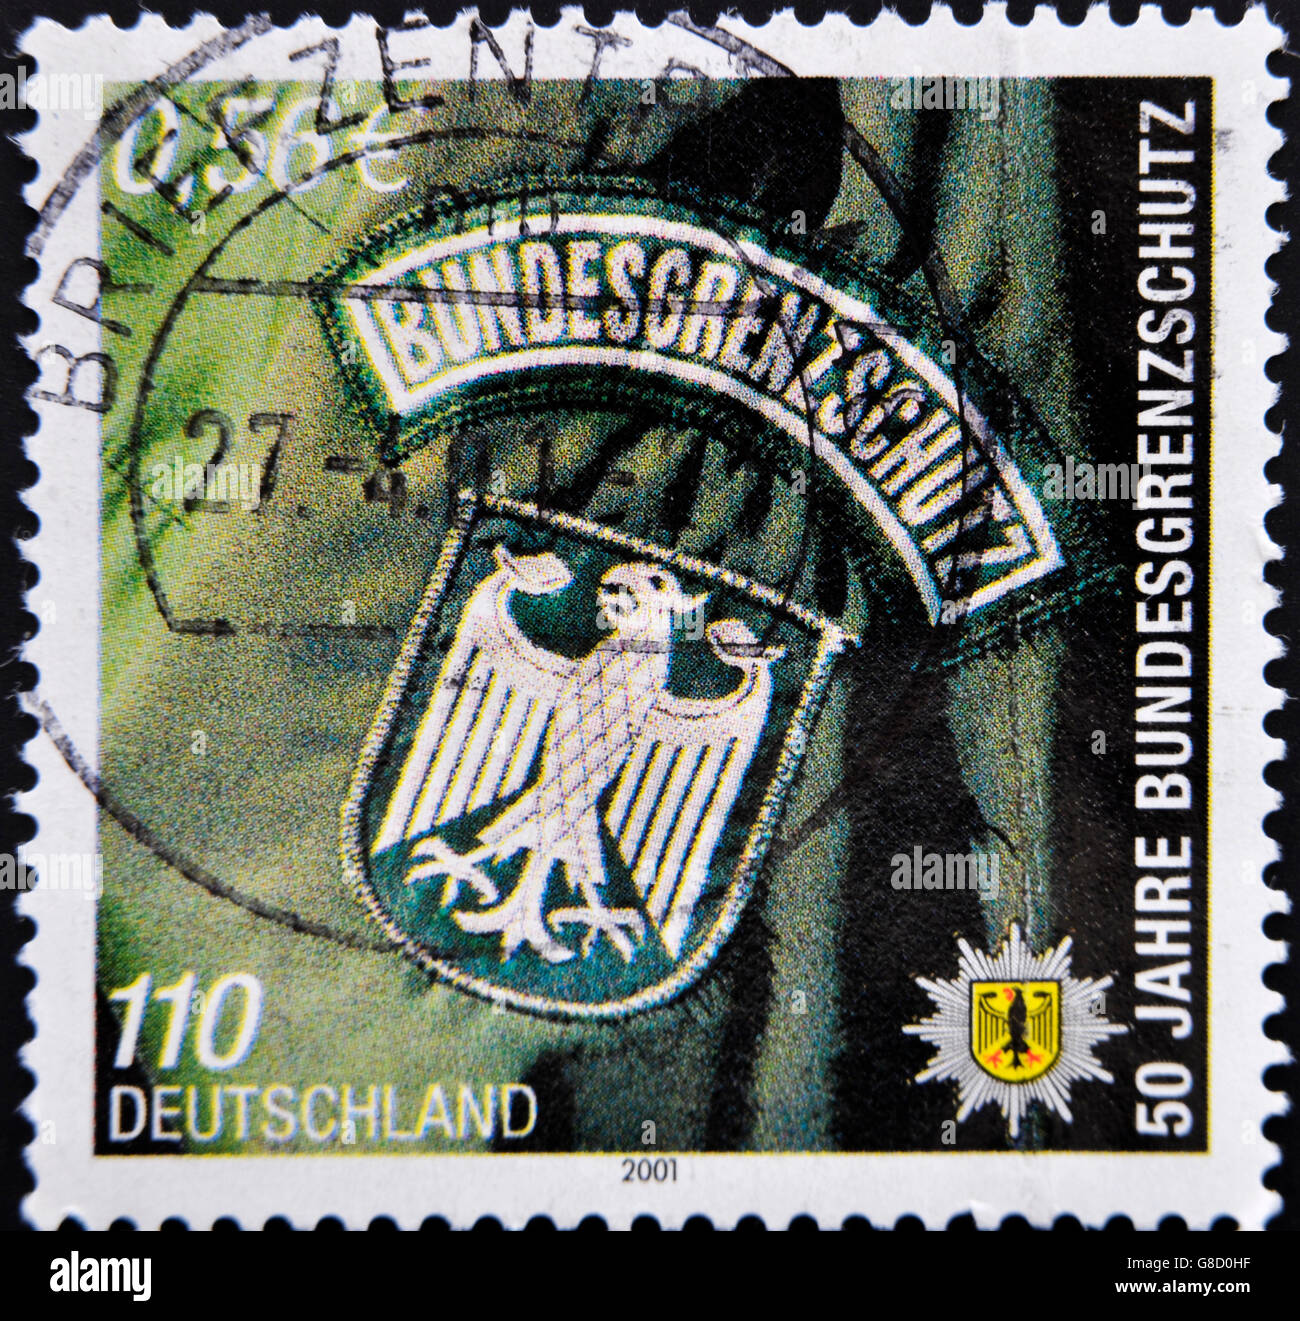 Allemagne- VERS 2001 : timbres en Allemagne montre Police Fédérale des Frontières, vers 2001. Banque D'Images